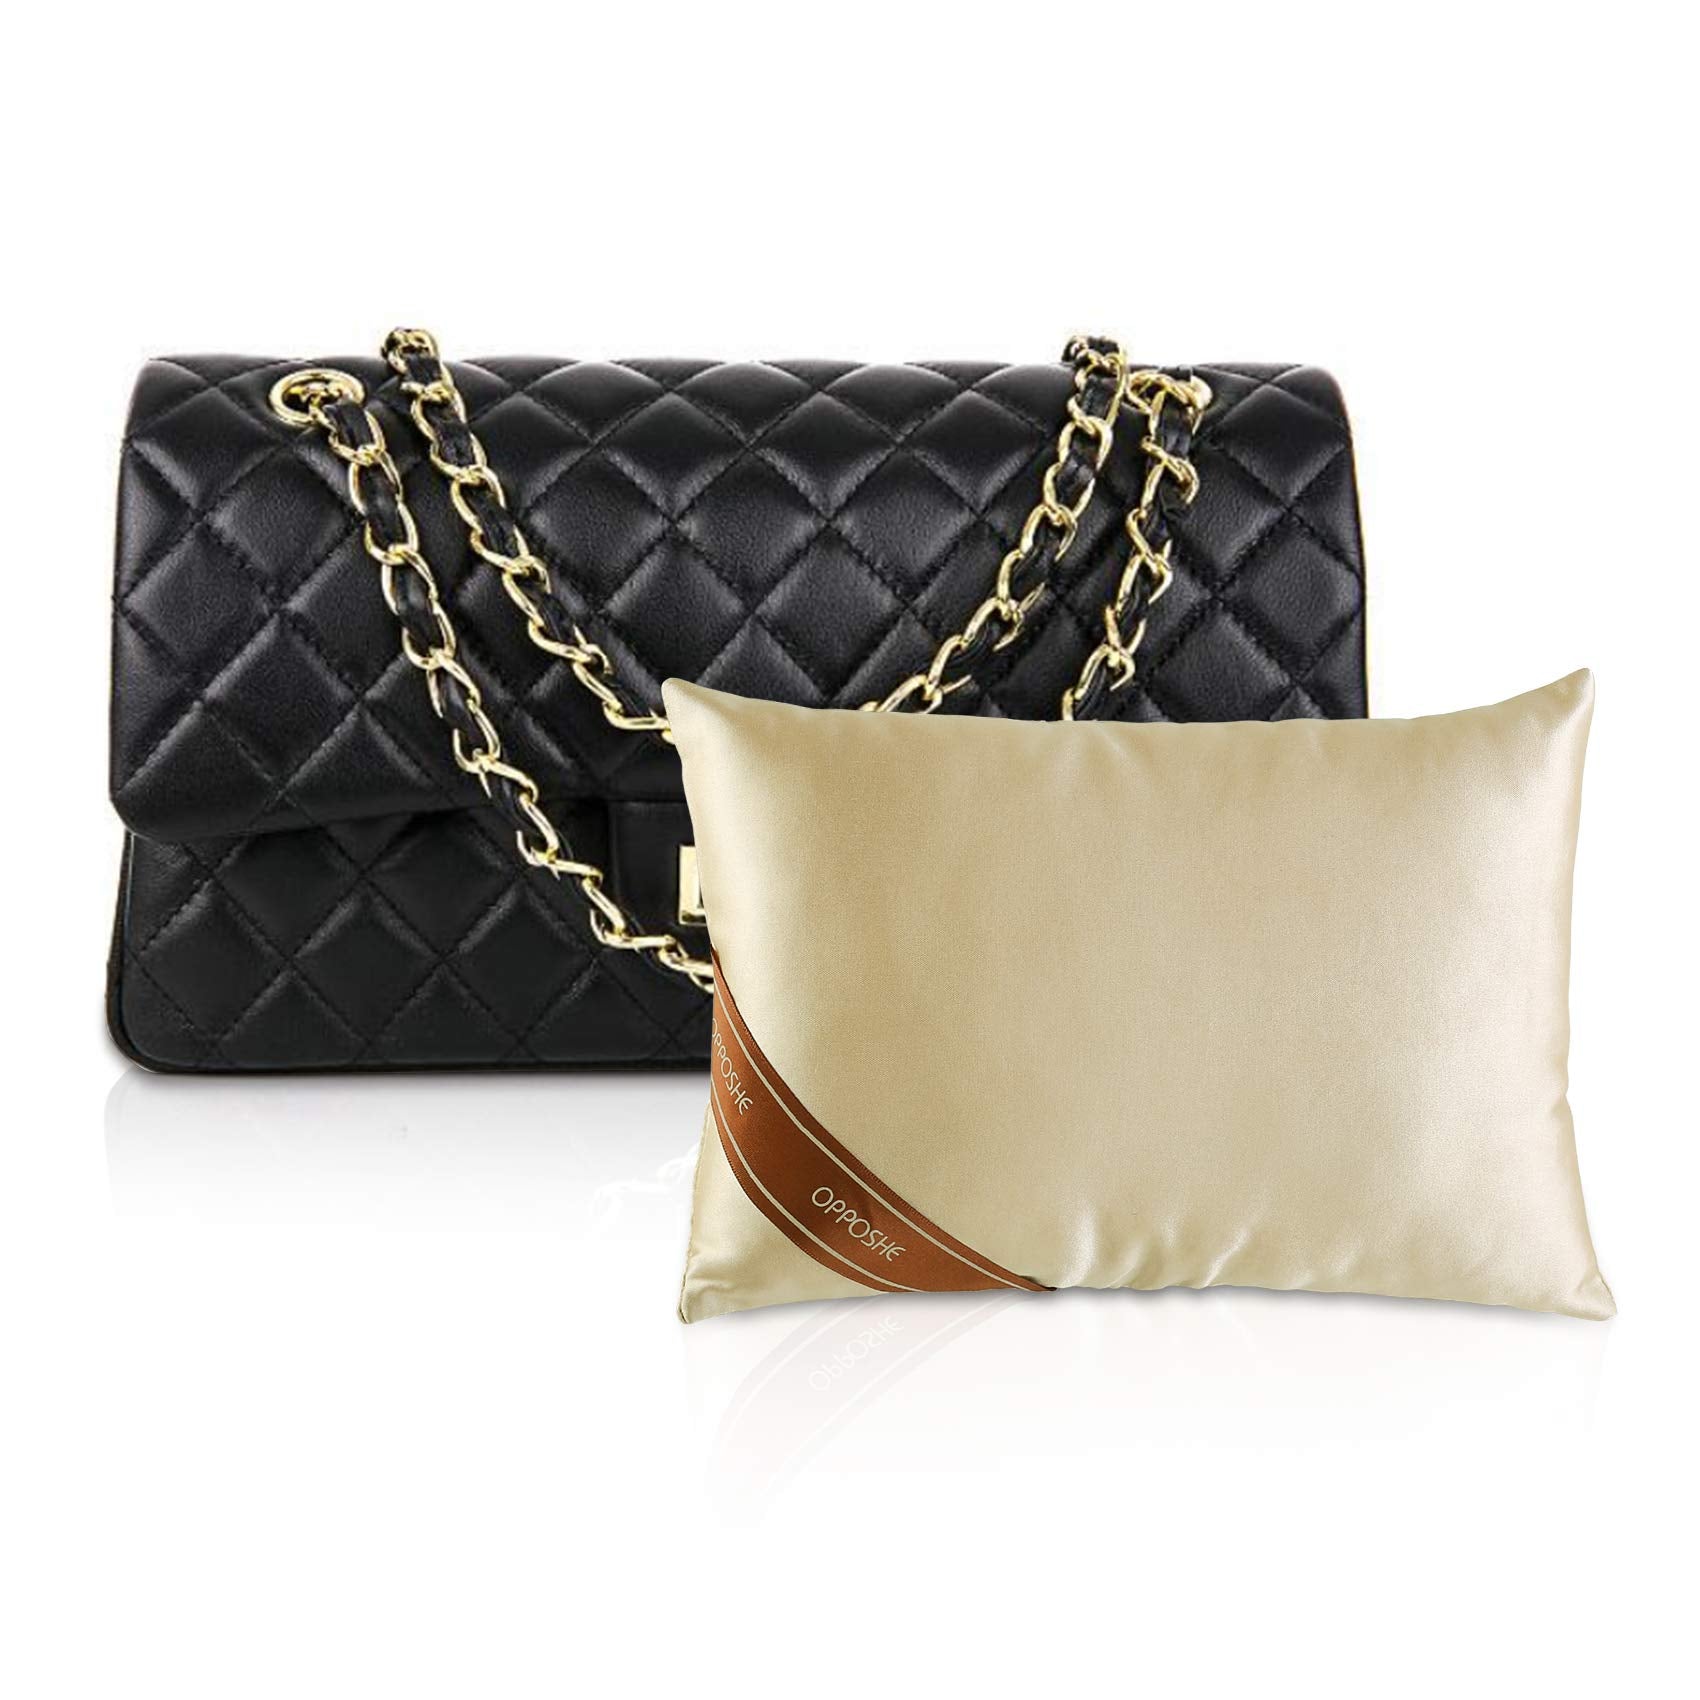 patent leather chanel bag black